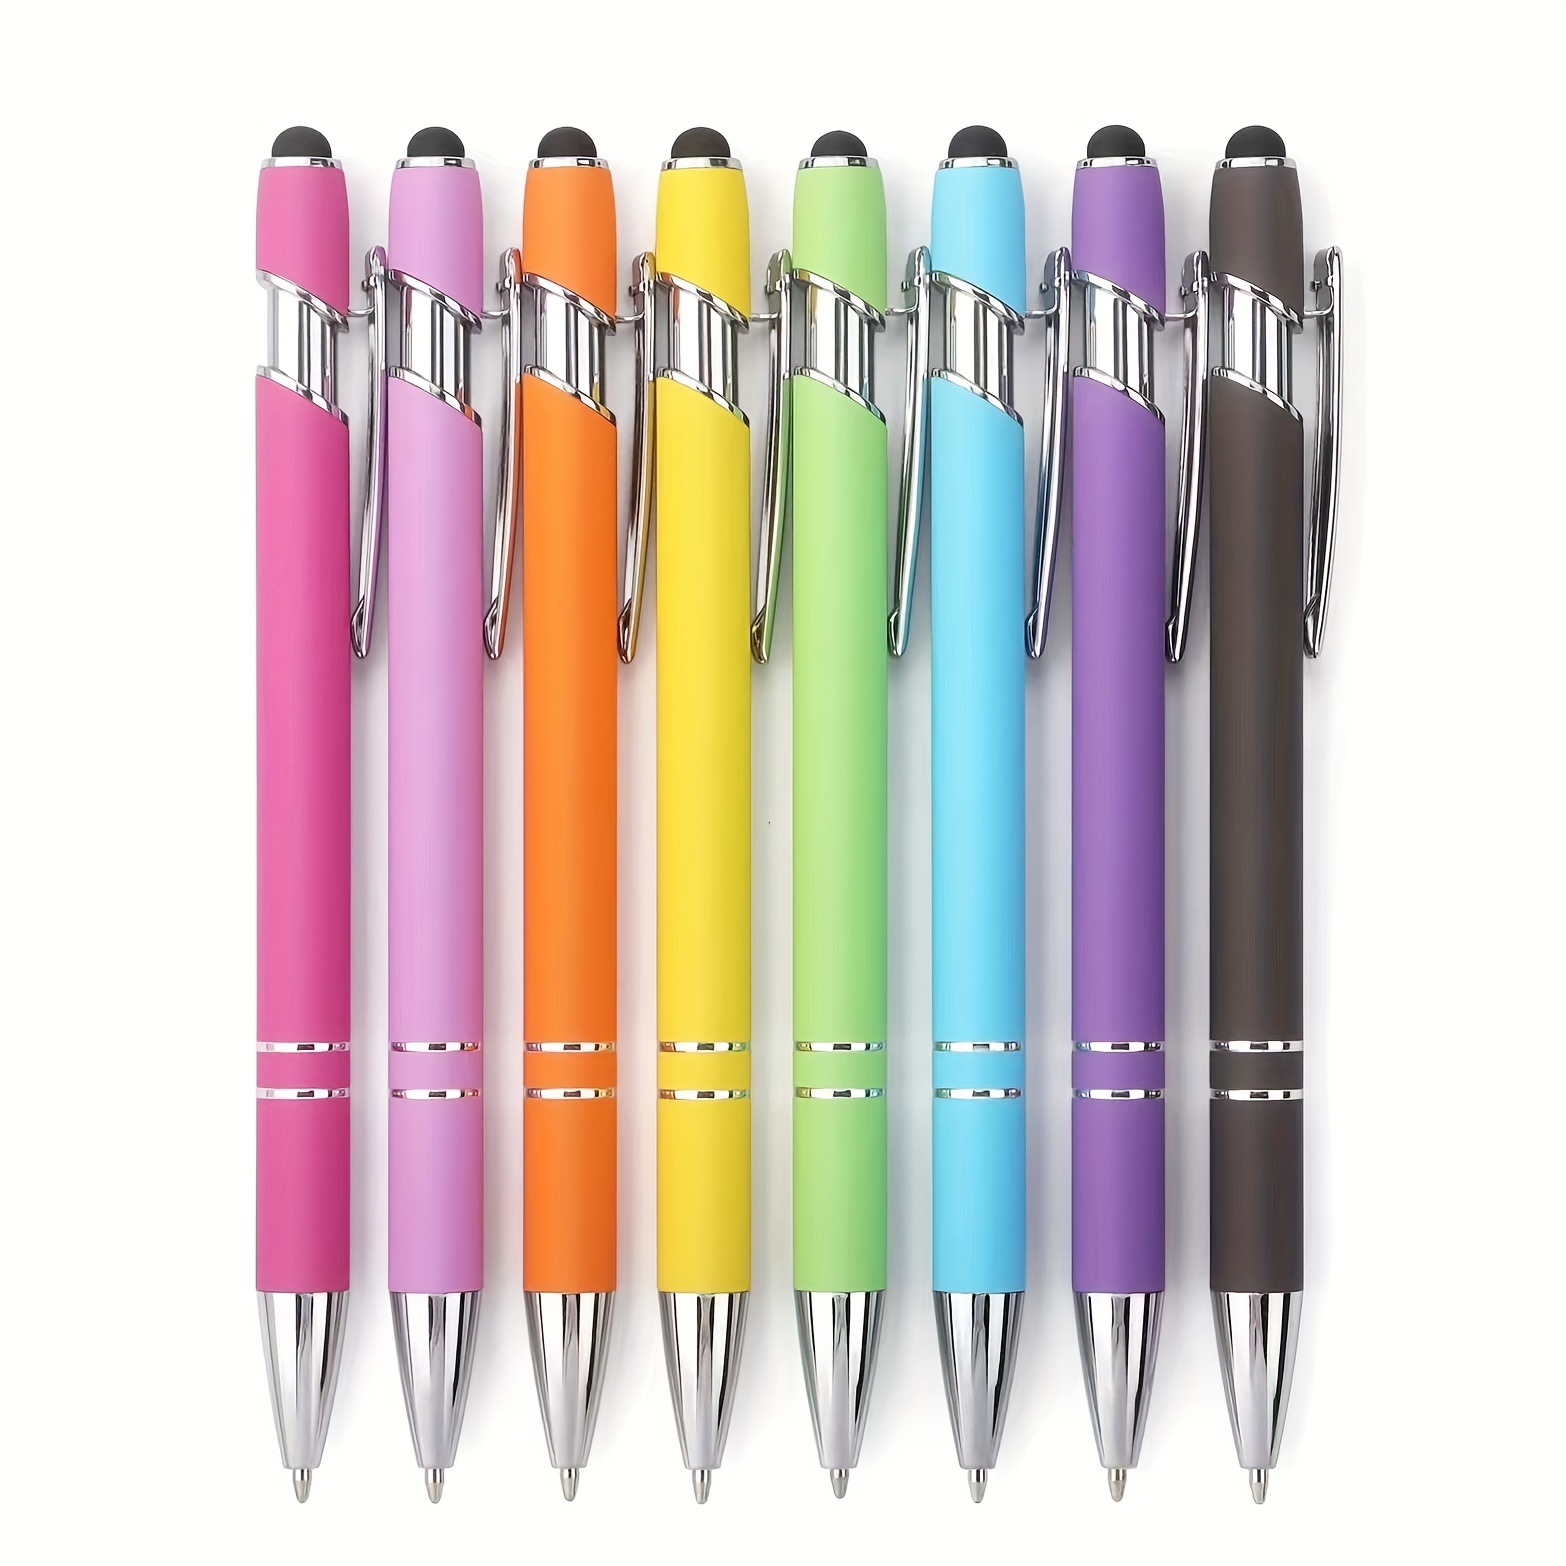  Paquete de 12 lápices capacitivos para pantallas táctiles  innhom Stylus Pen para iPad, compatible con iPad, iPhone, tabletas,  Samsung, Kindle y bolígrafos de tinta negra, bolígrafos 2 en 1 : Celulares  y Accesorios